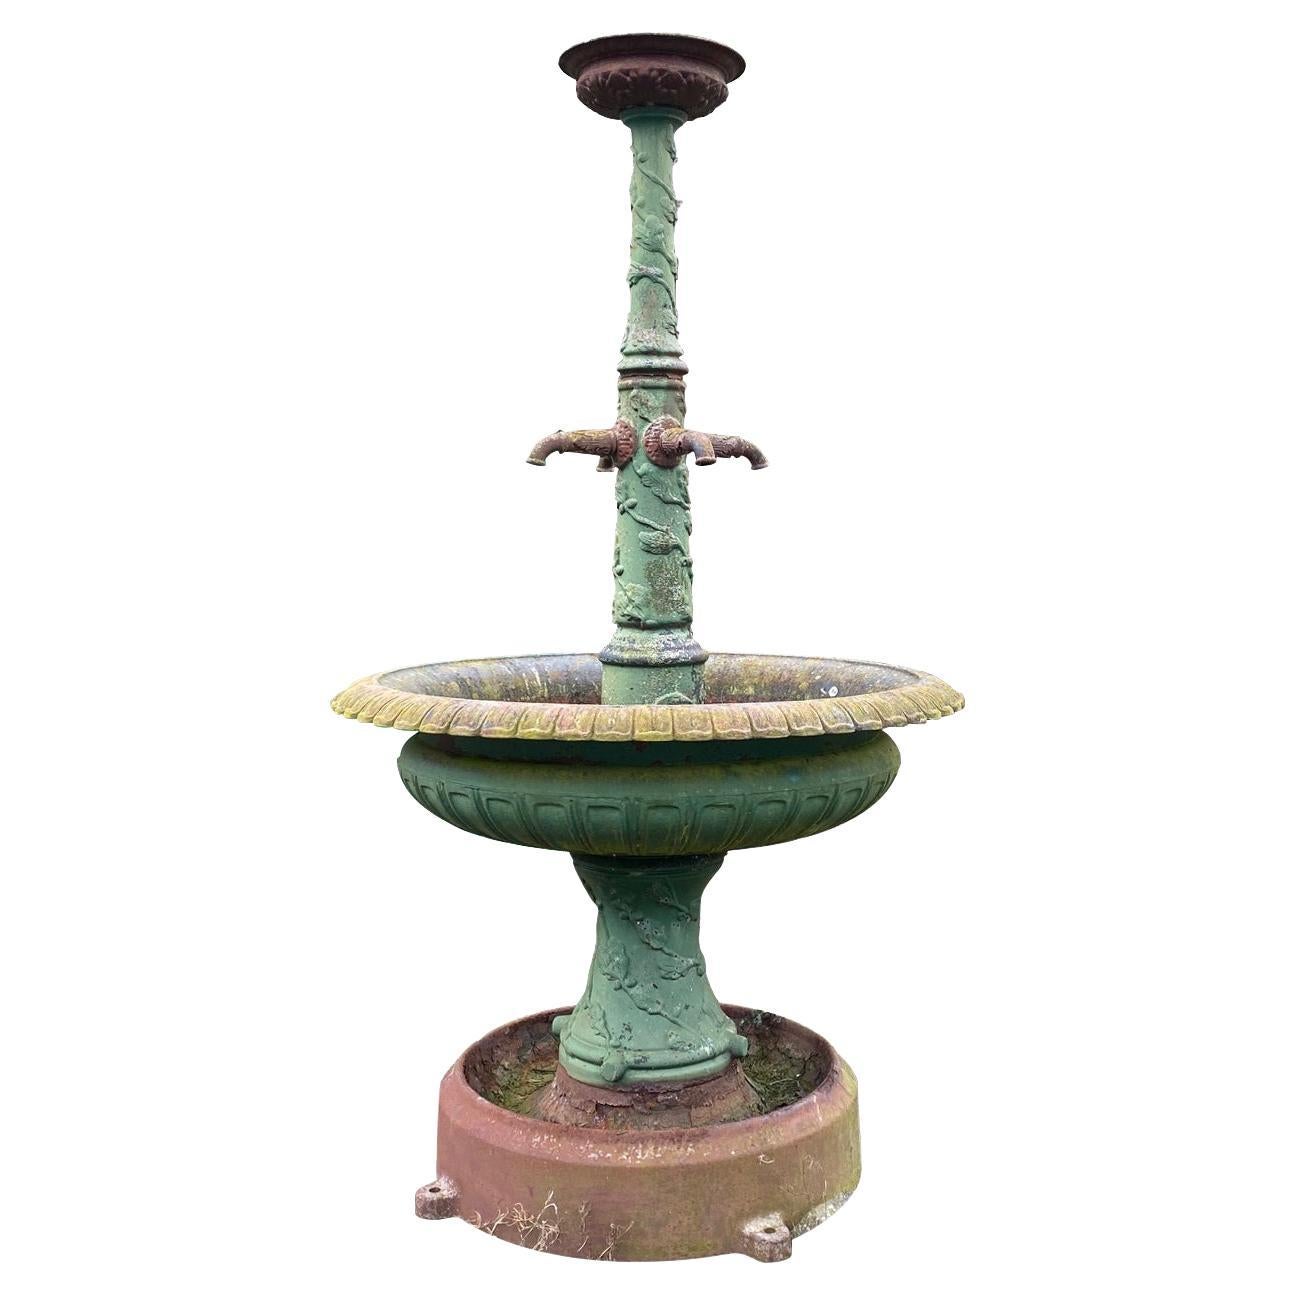 Antique Cast Iron Town Fountain with Oak Leaf Decoration